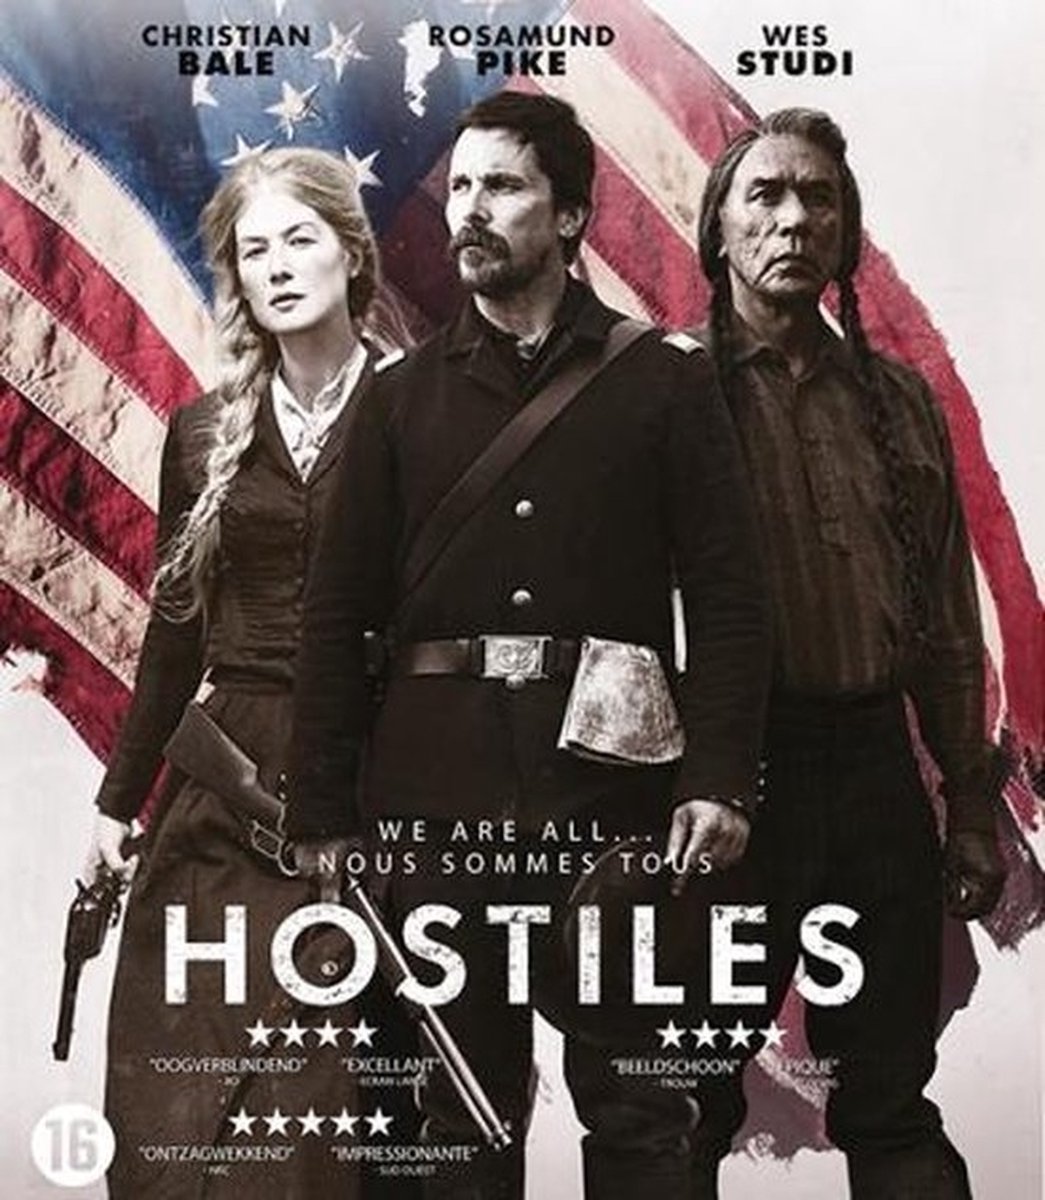 Hostiles (Blu-ray)